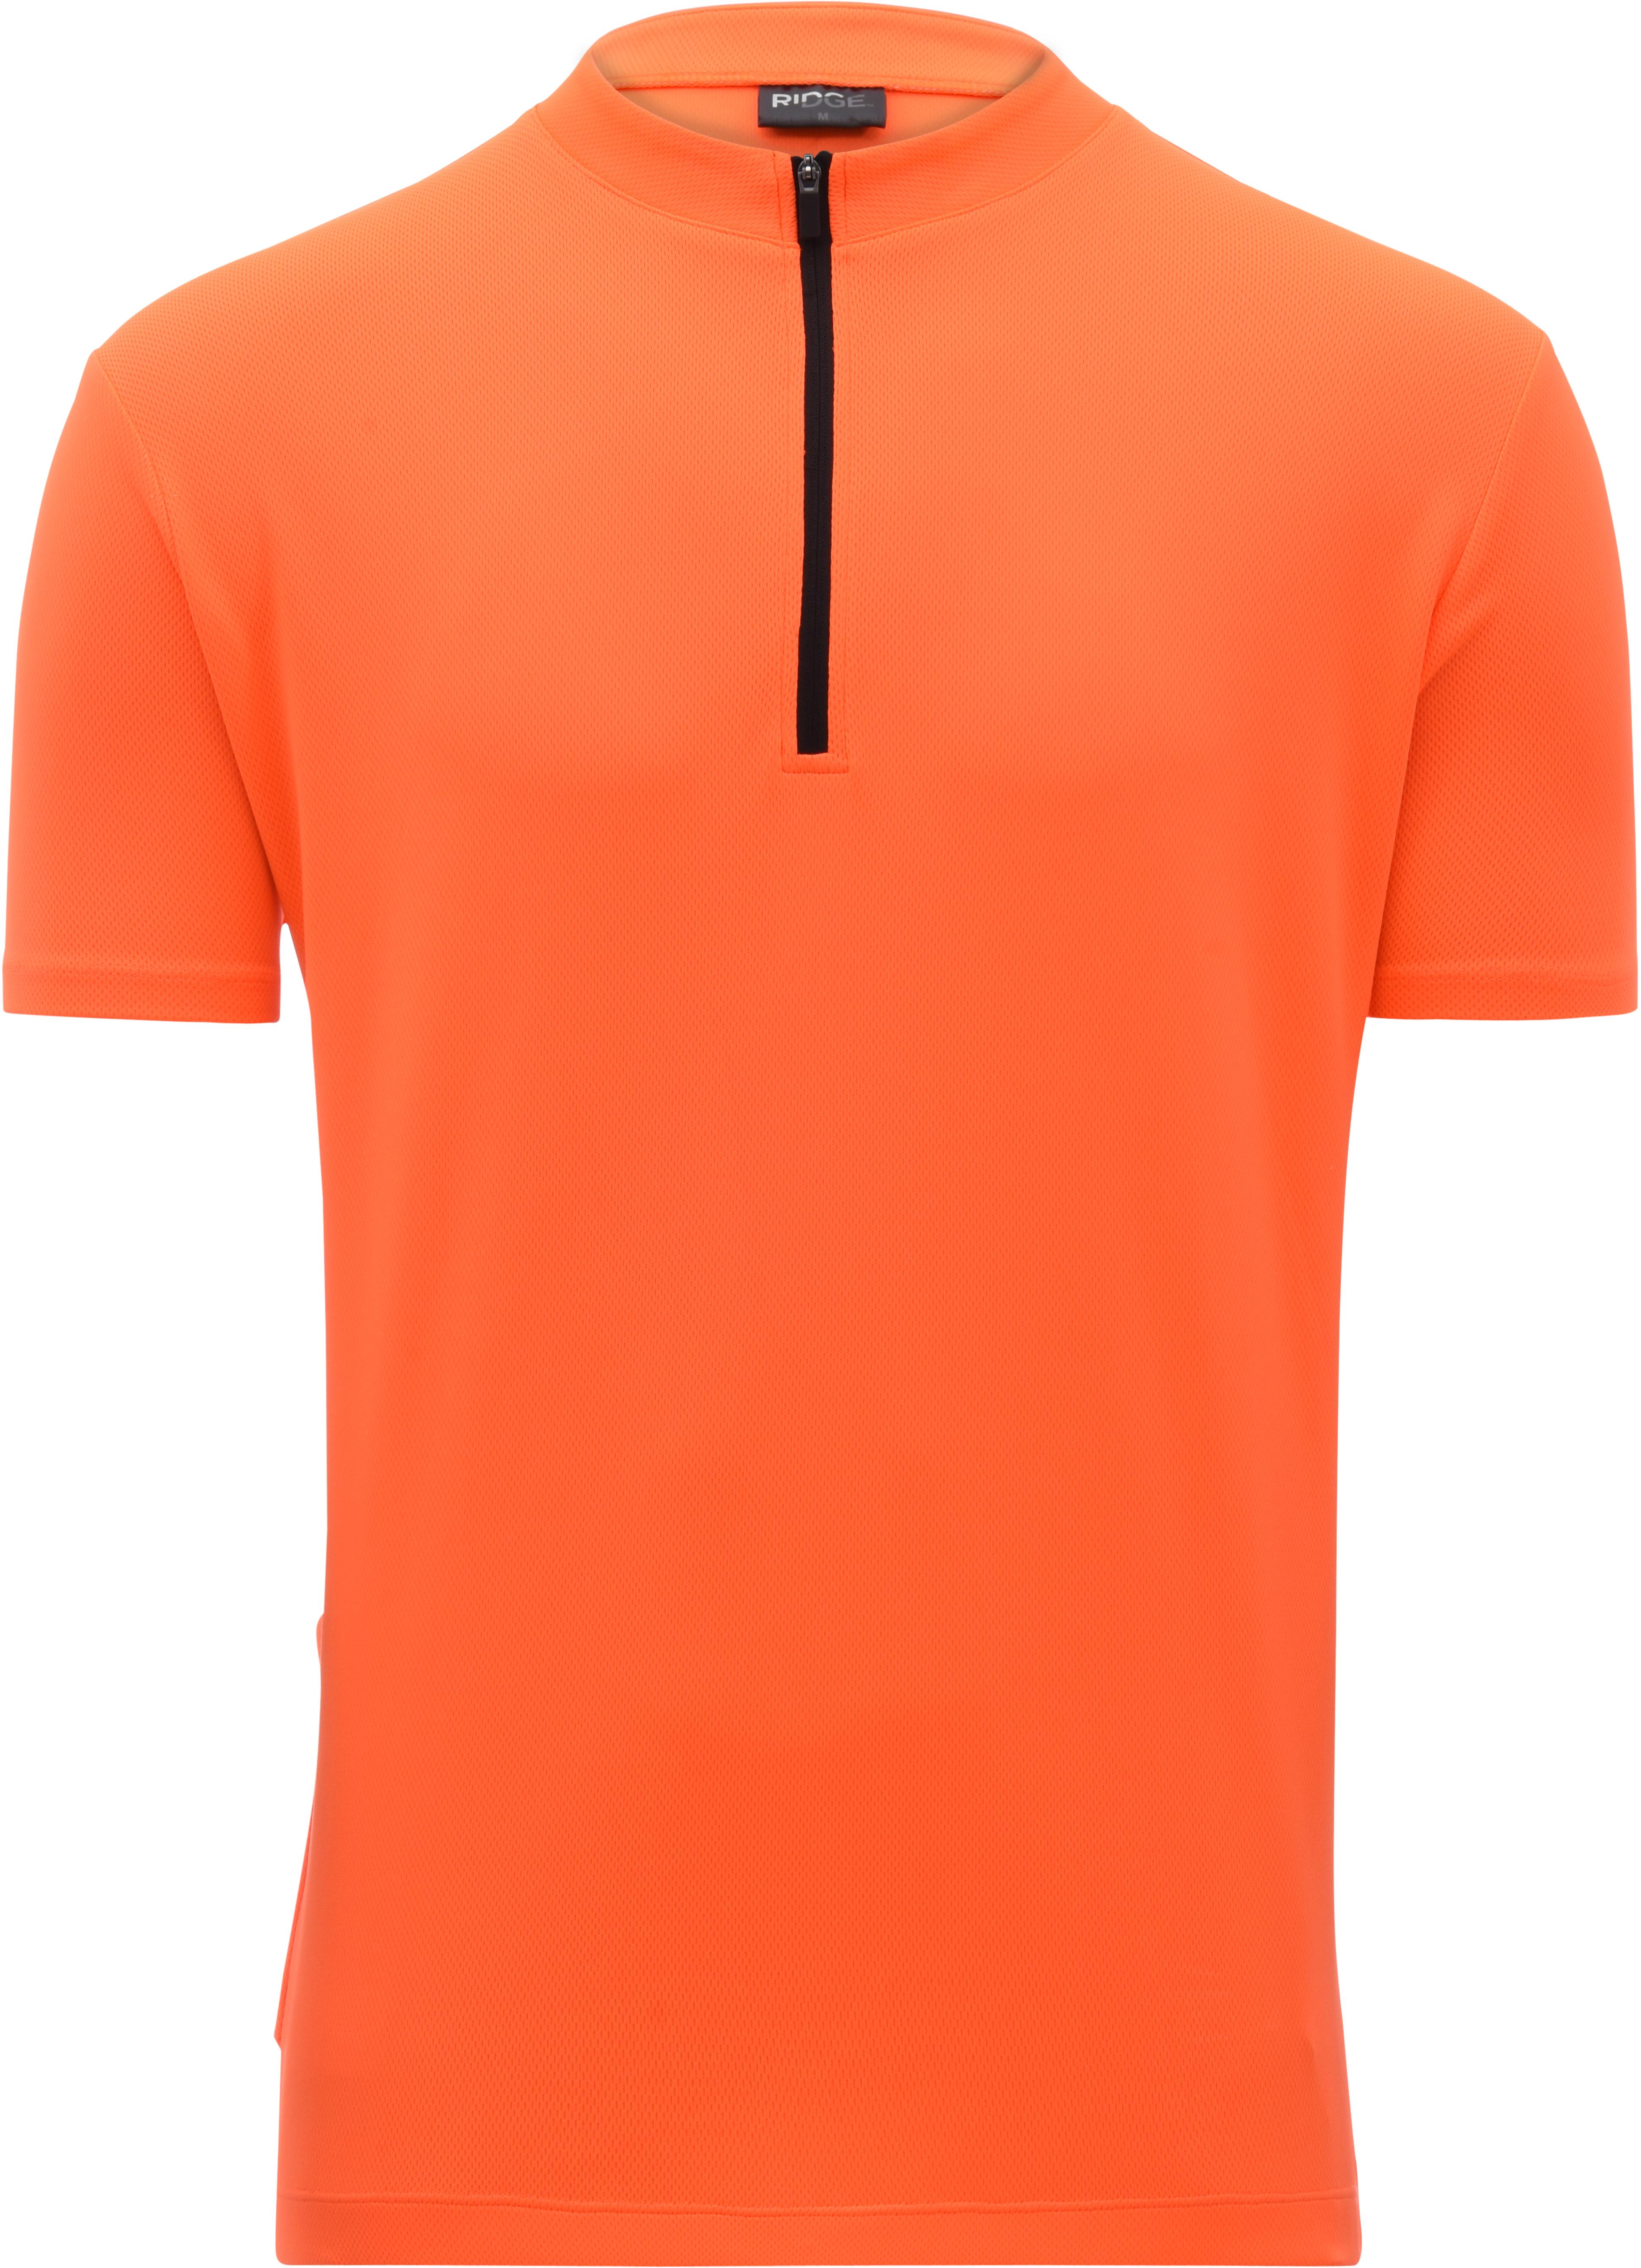 Dare2B Trivial Mens Cycling Jersey Long Sleeve Orange Half Zip Bike Cycle Top 